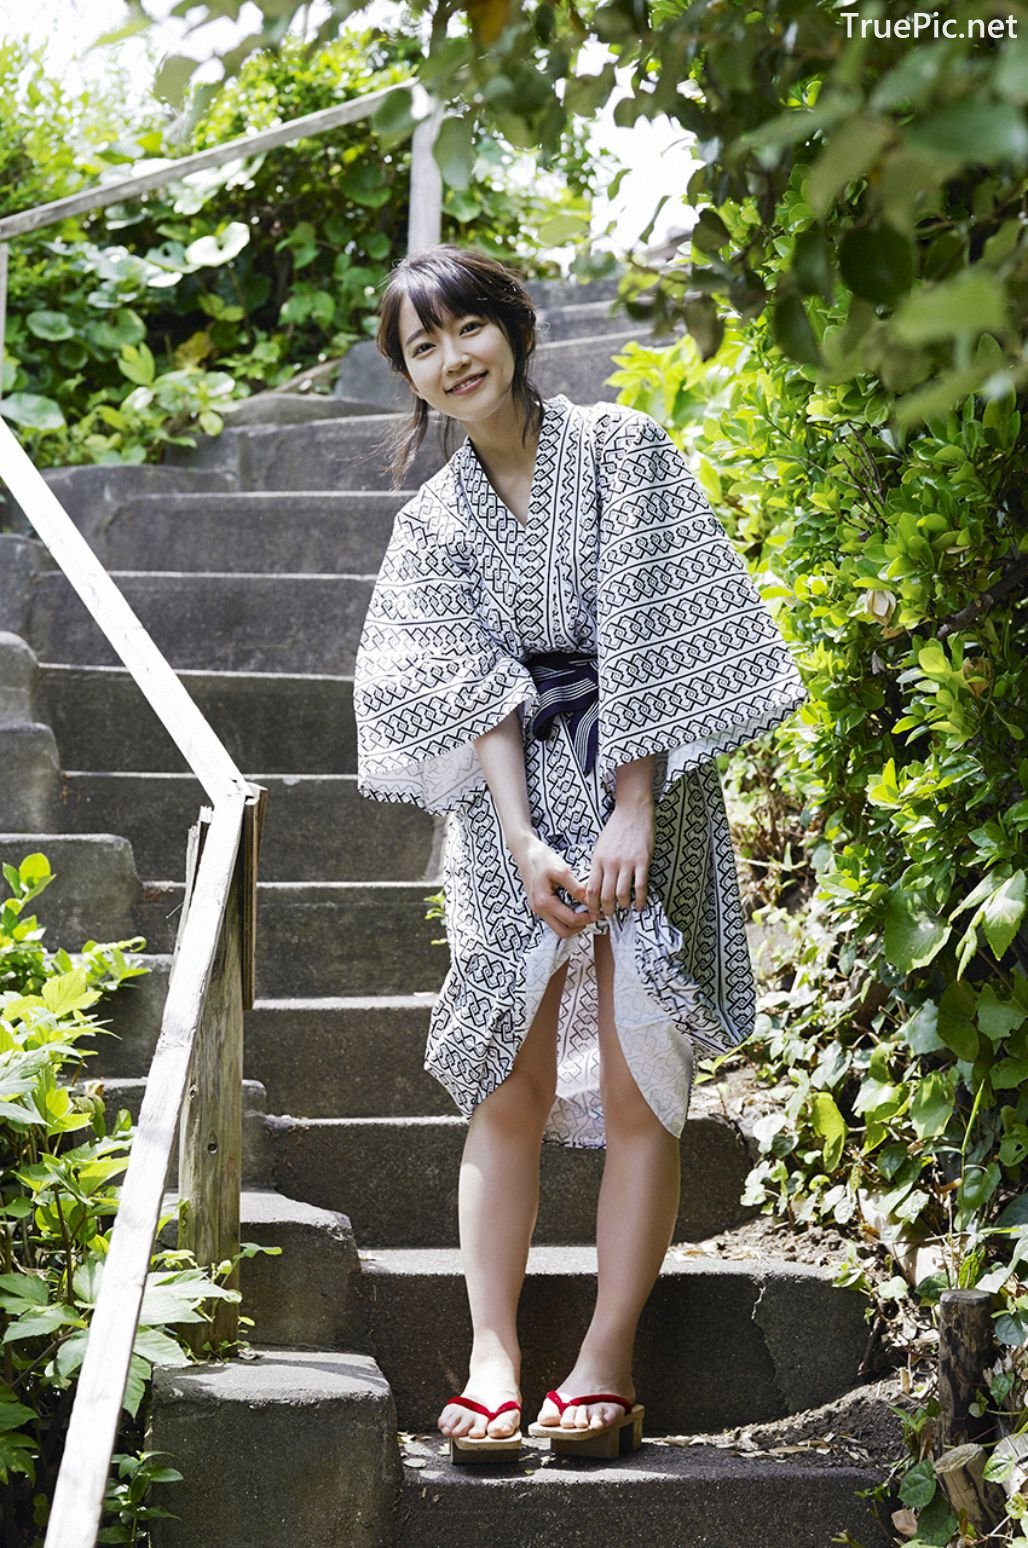 Image-Japanese-Actress-And-Model-Riho-Yoshioka-Pure-Beauty-Of-Sea-Goddess-TruePic.net- Picture-42